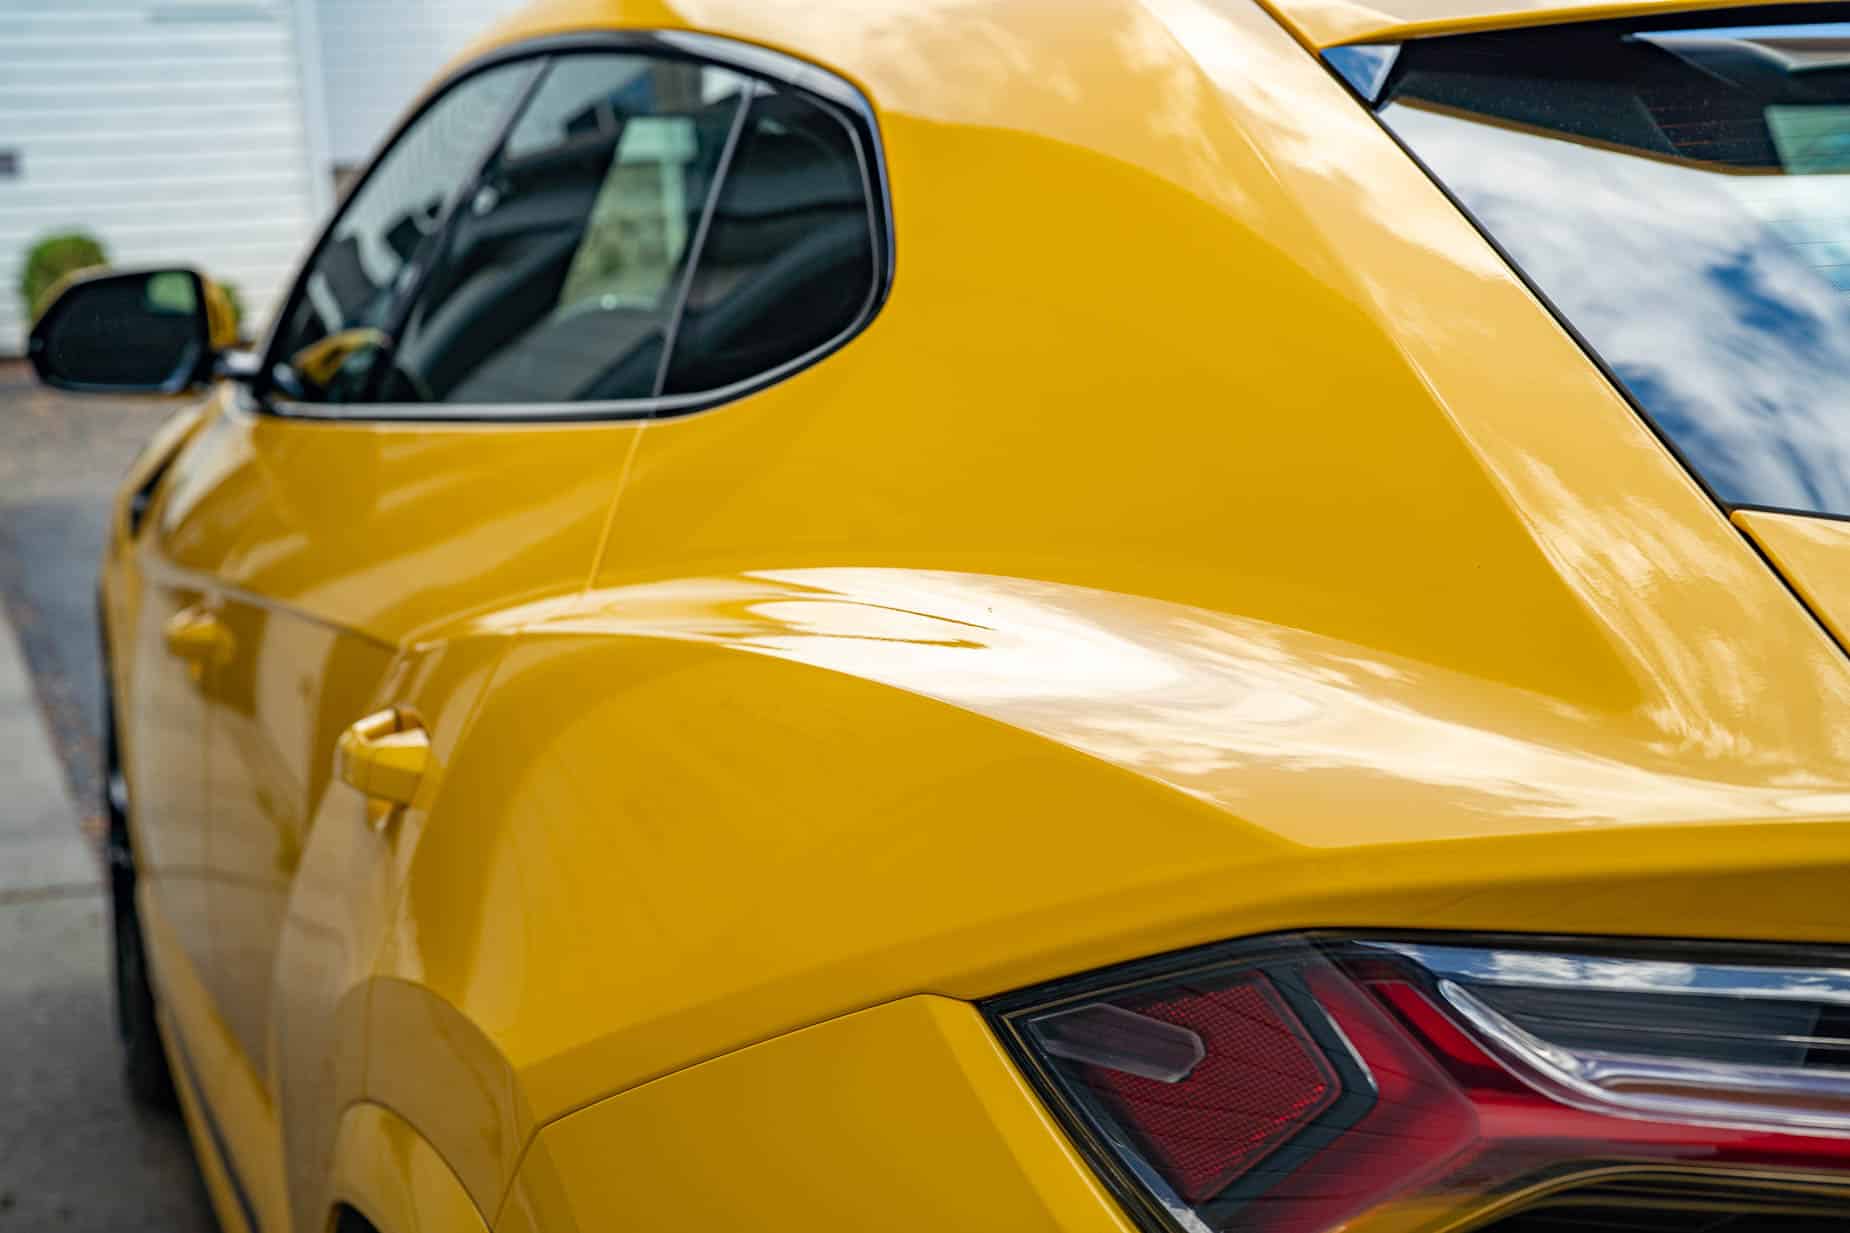 2021 Lamborghini Urus Giallo Auge Yellow Black Wheels Xpel Paint Protection Film Ppf Ceramic Coating 01